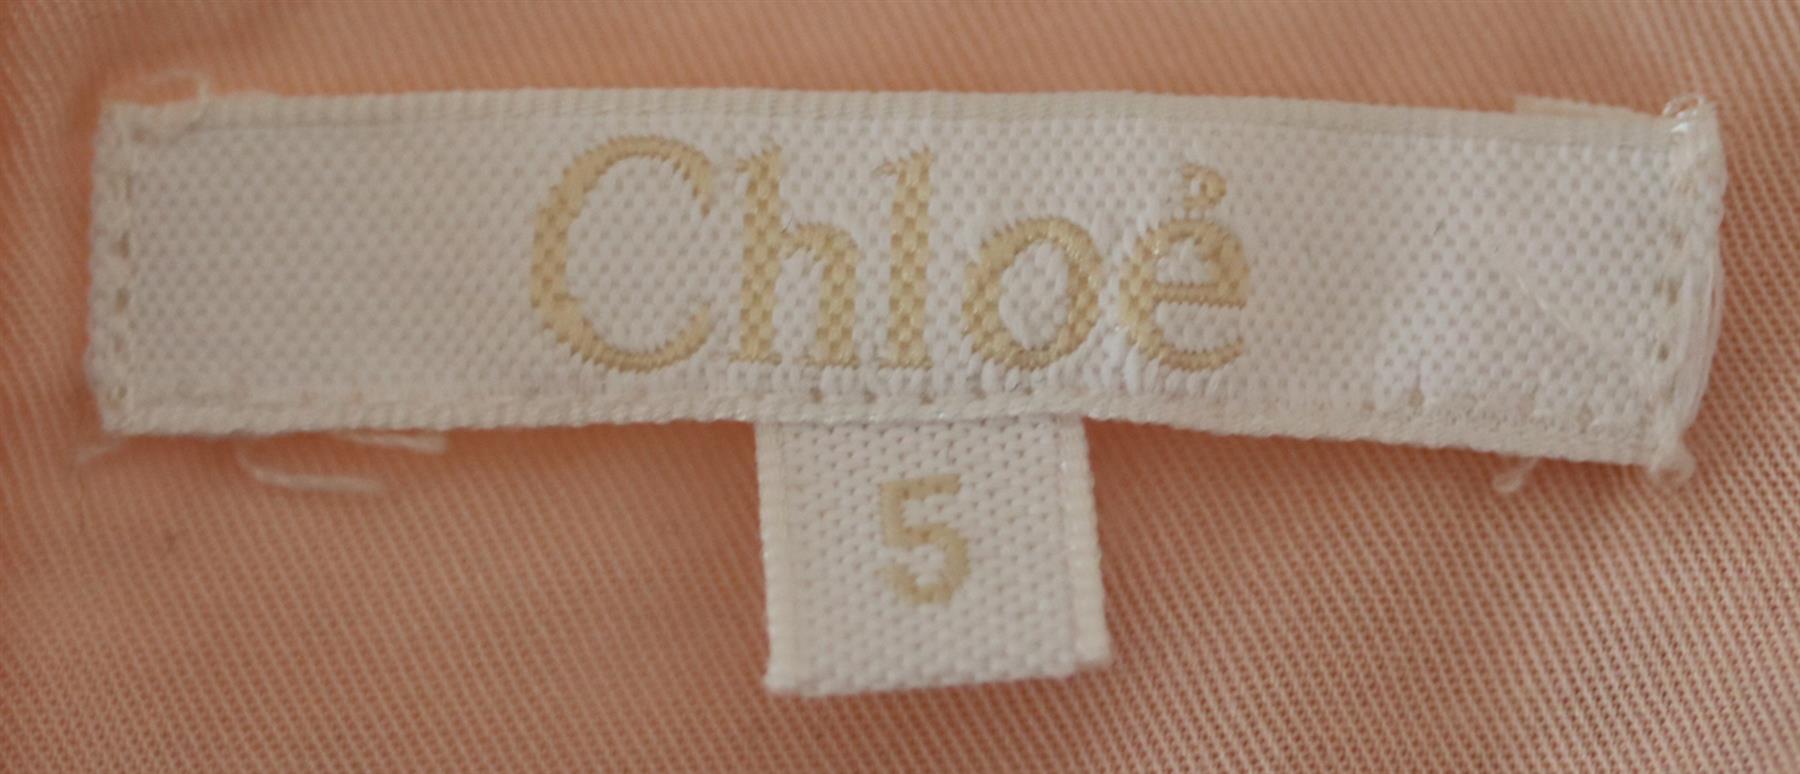 CHLOÉ KIDS GIRLS CROCHET CREPE DRESS 5 YEARS